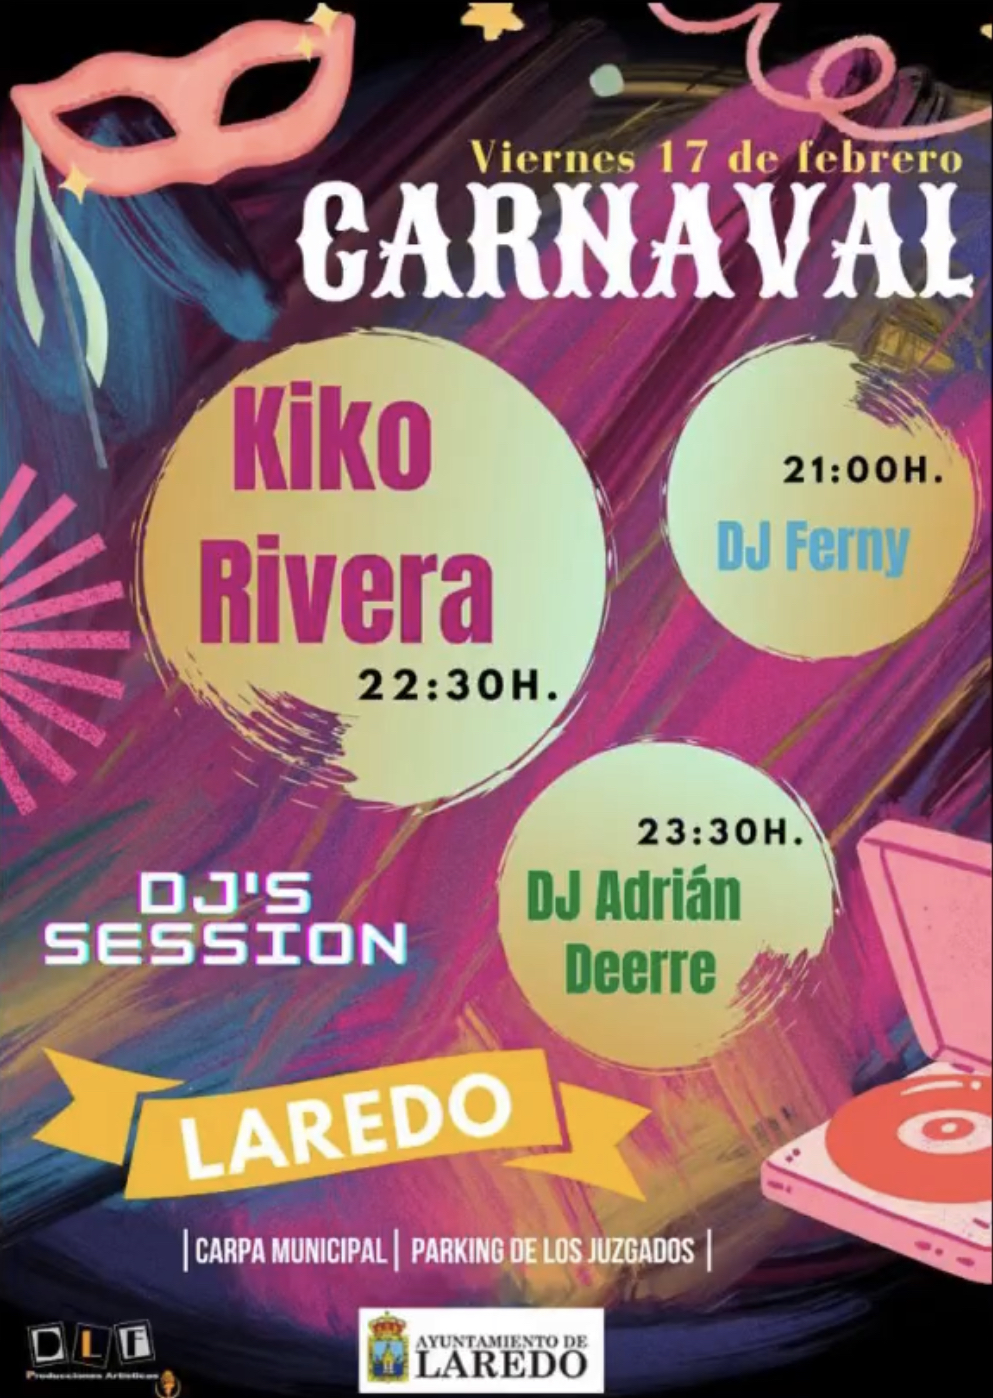 Fiesta con DJ Ferry, Kiko Rivera y DJ Adrian Deerre – Carnaval de Laredo 2023